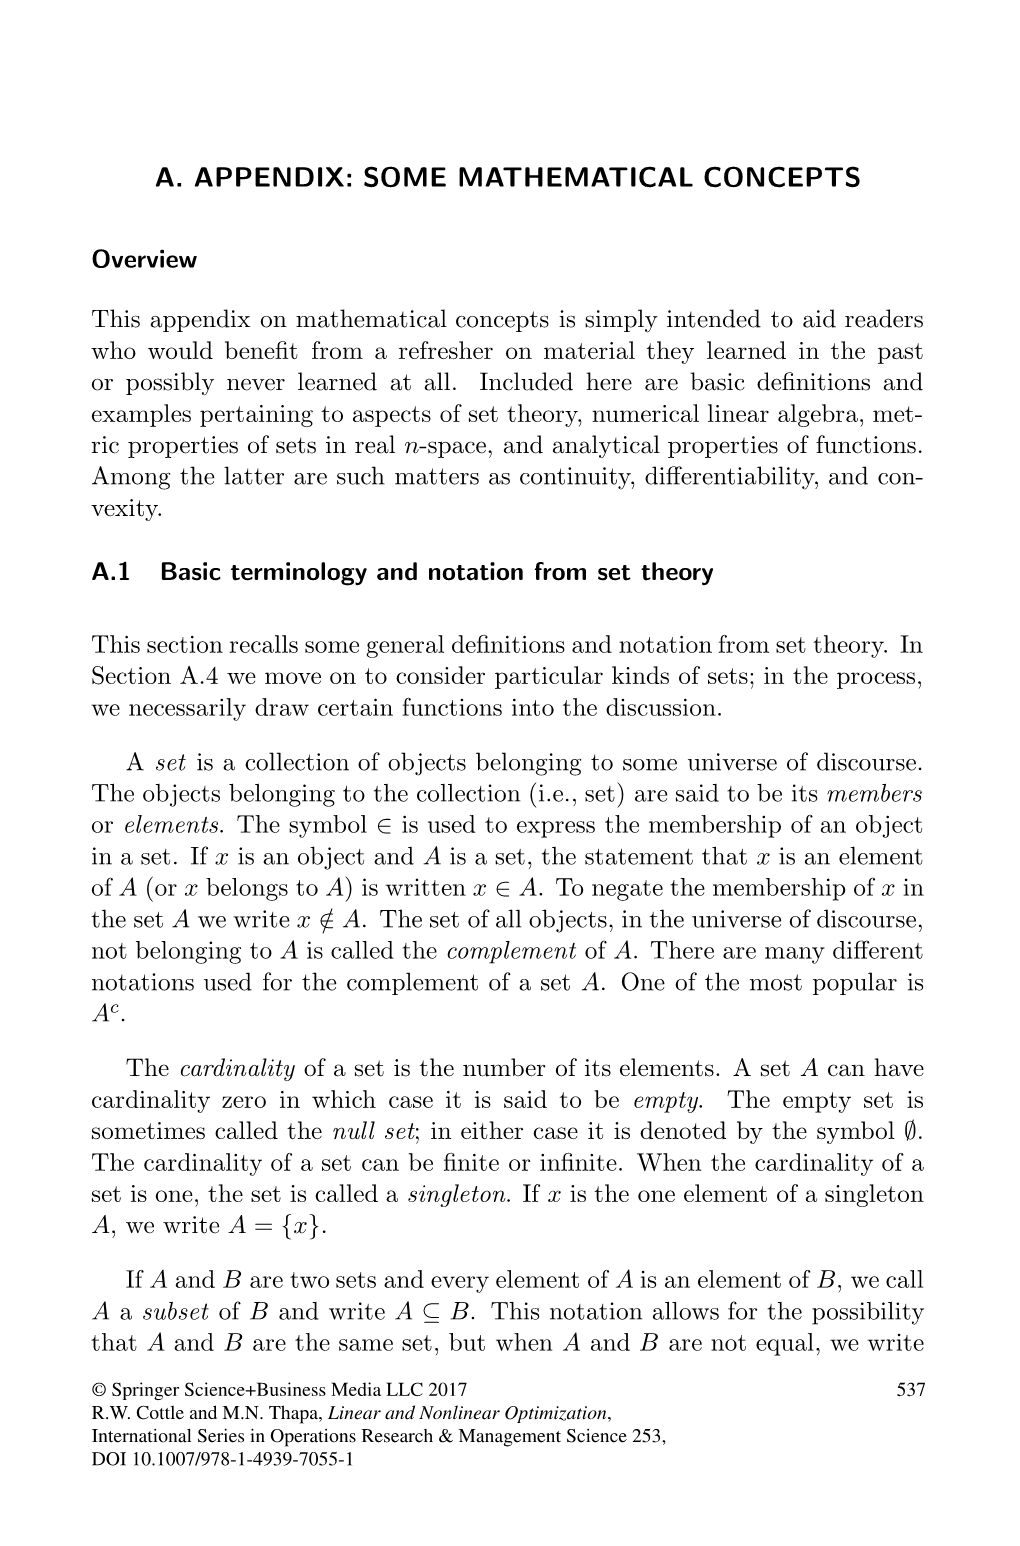 A. Appendix: Some Mathematical Concepts